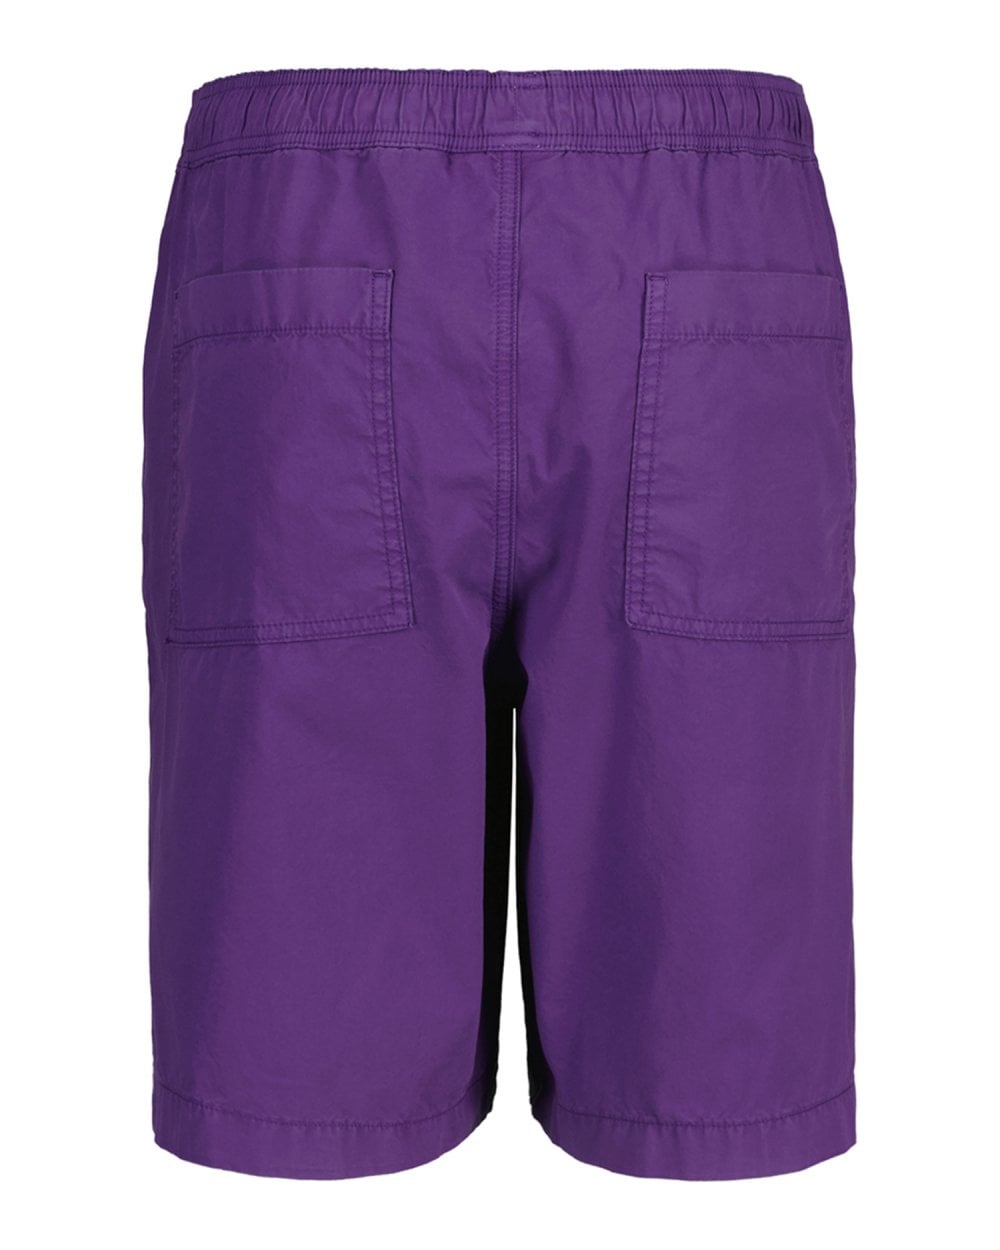 Sunfaded Drawstring Shorts